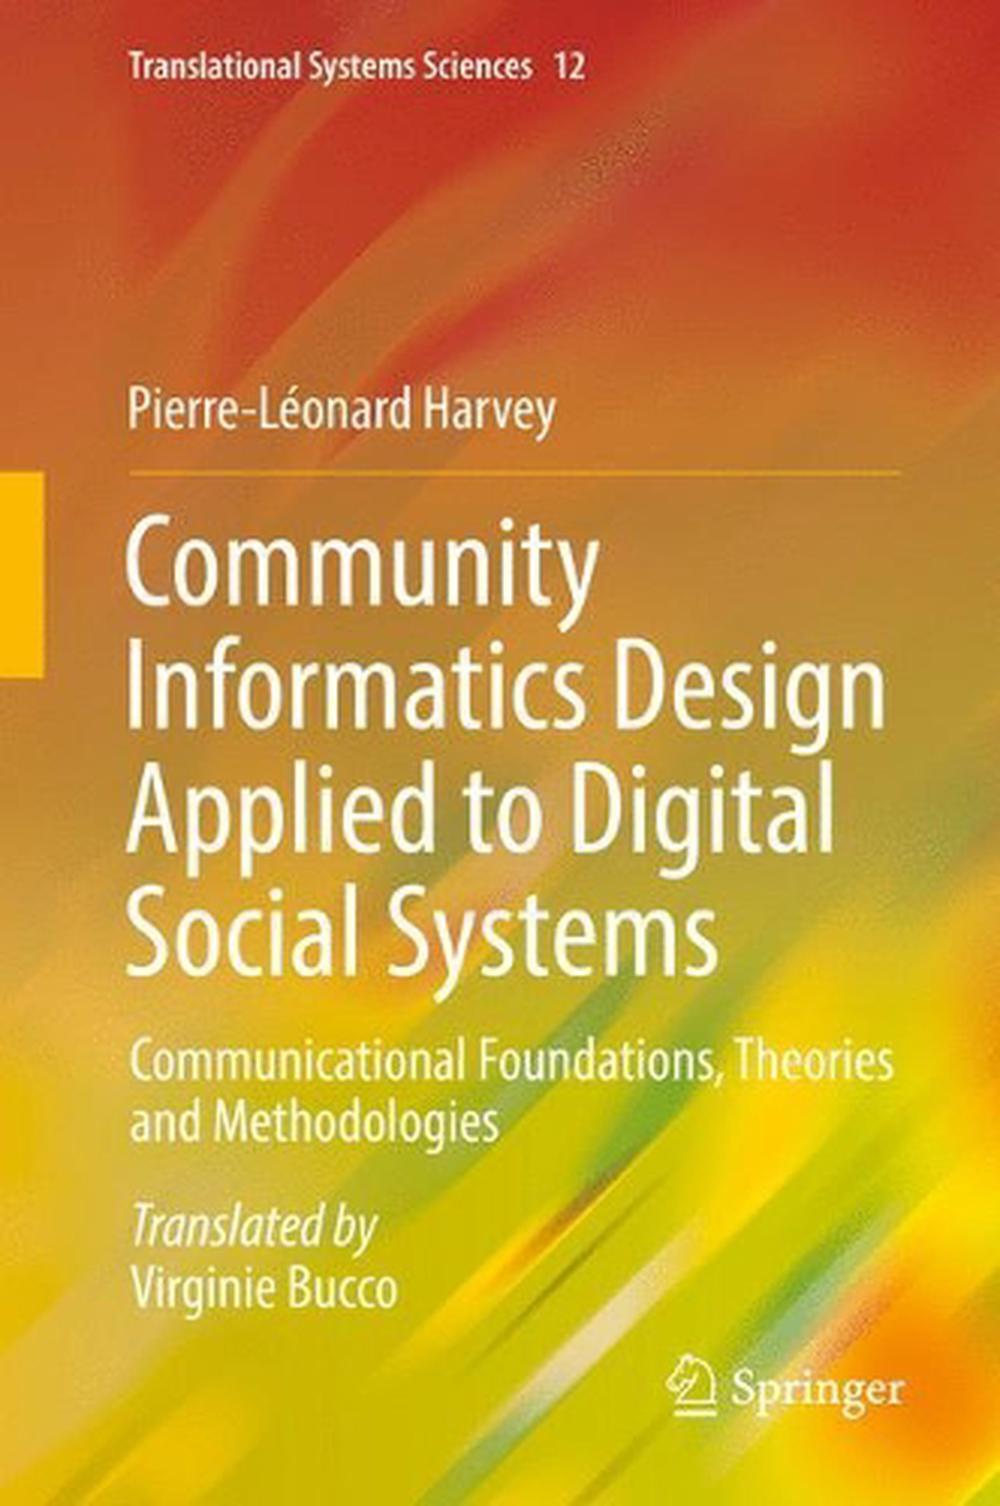 Community Informatics Design Applied To Digital Social Systems: Communicational